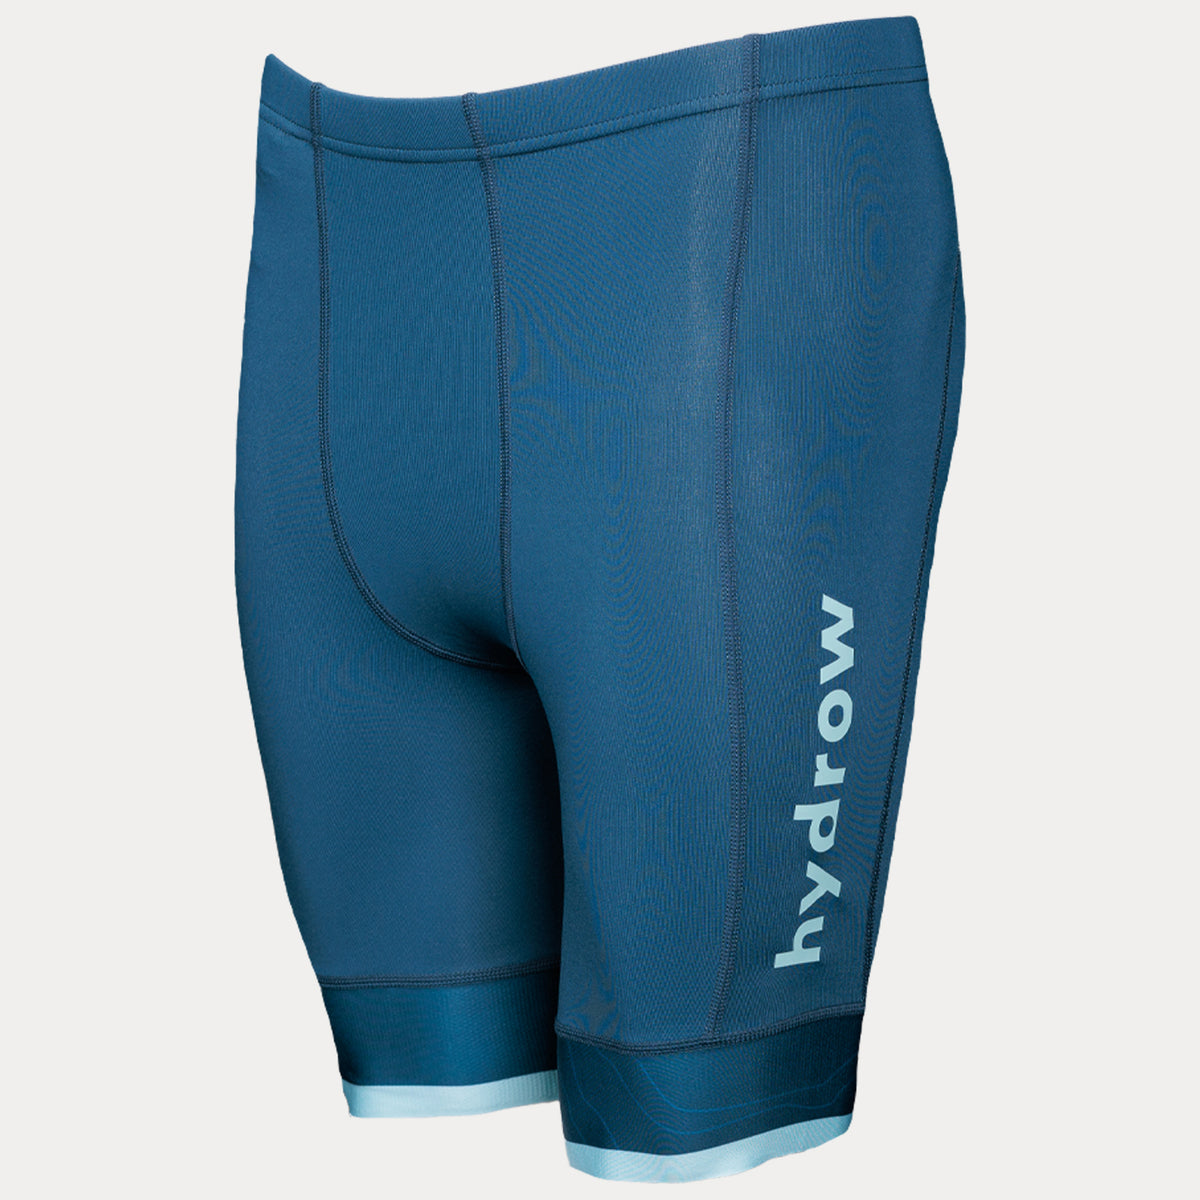 dark blue hydrow shorts with light blue hydrow text on leg